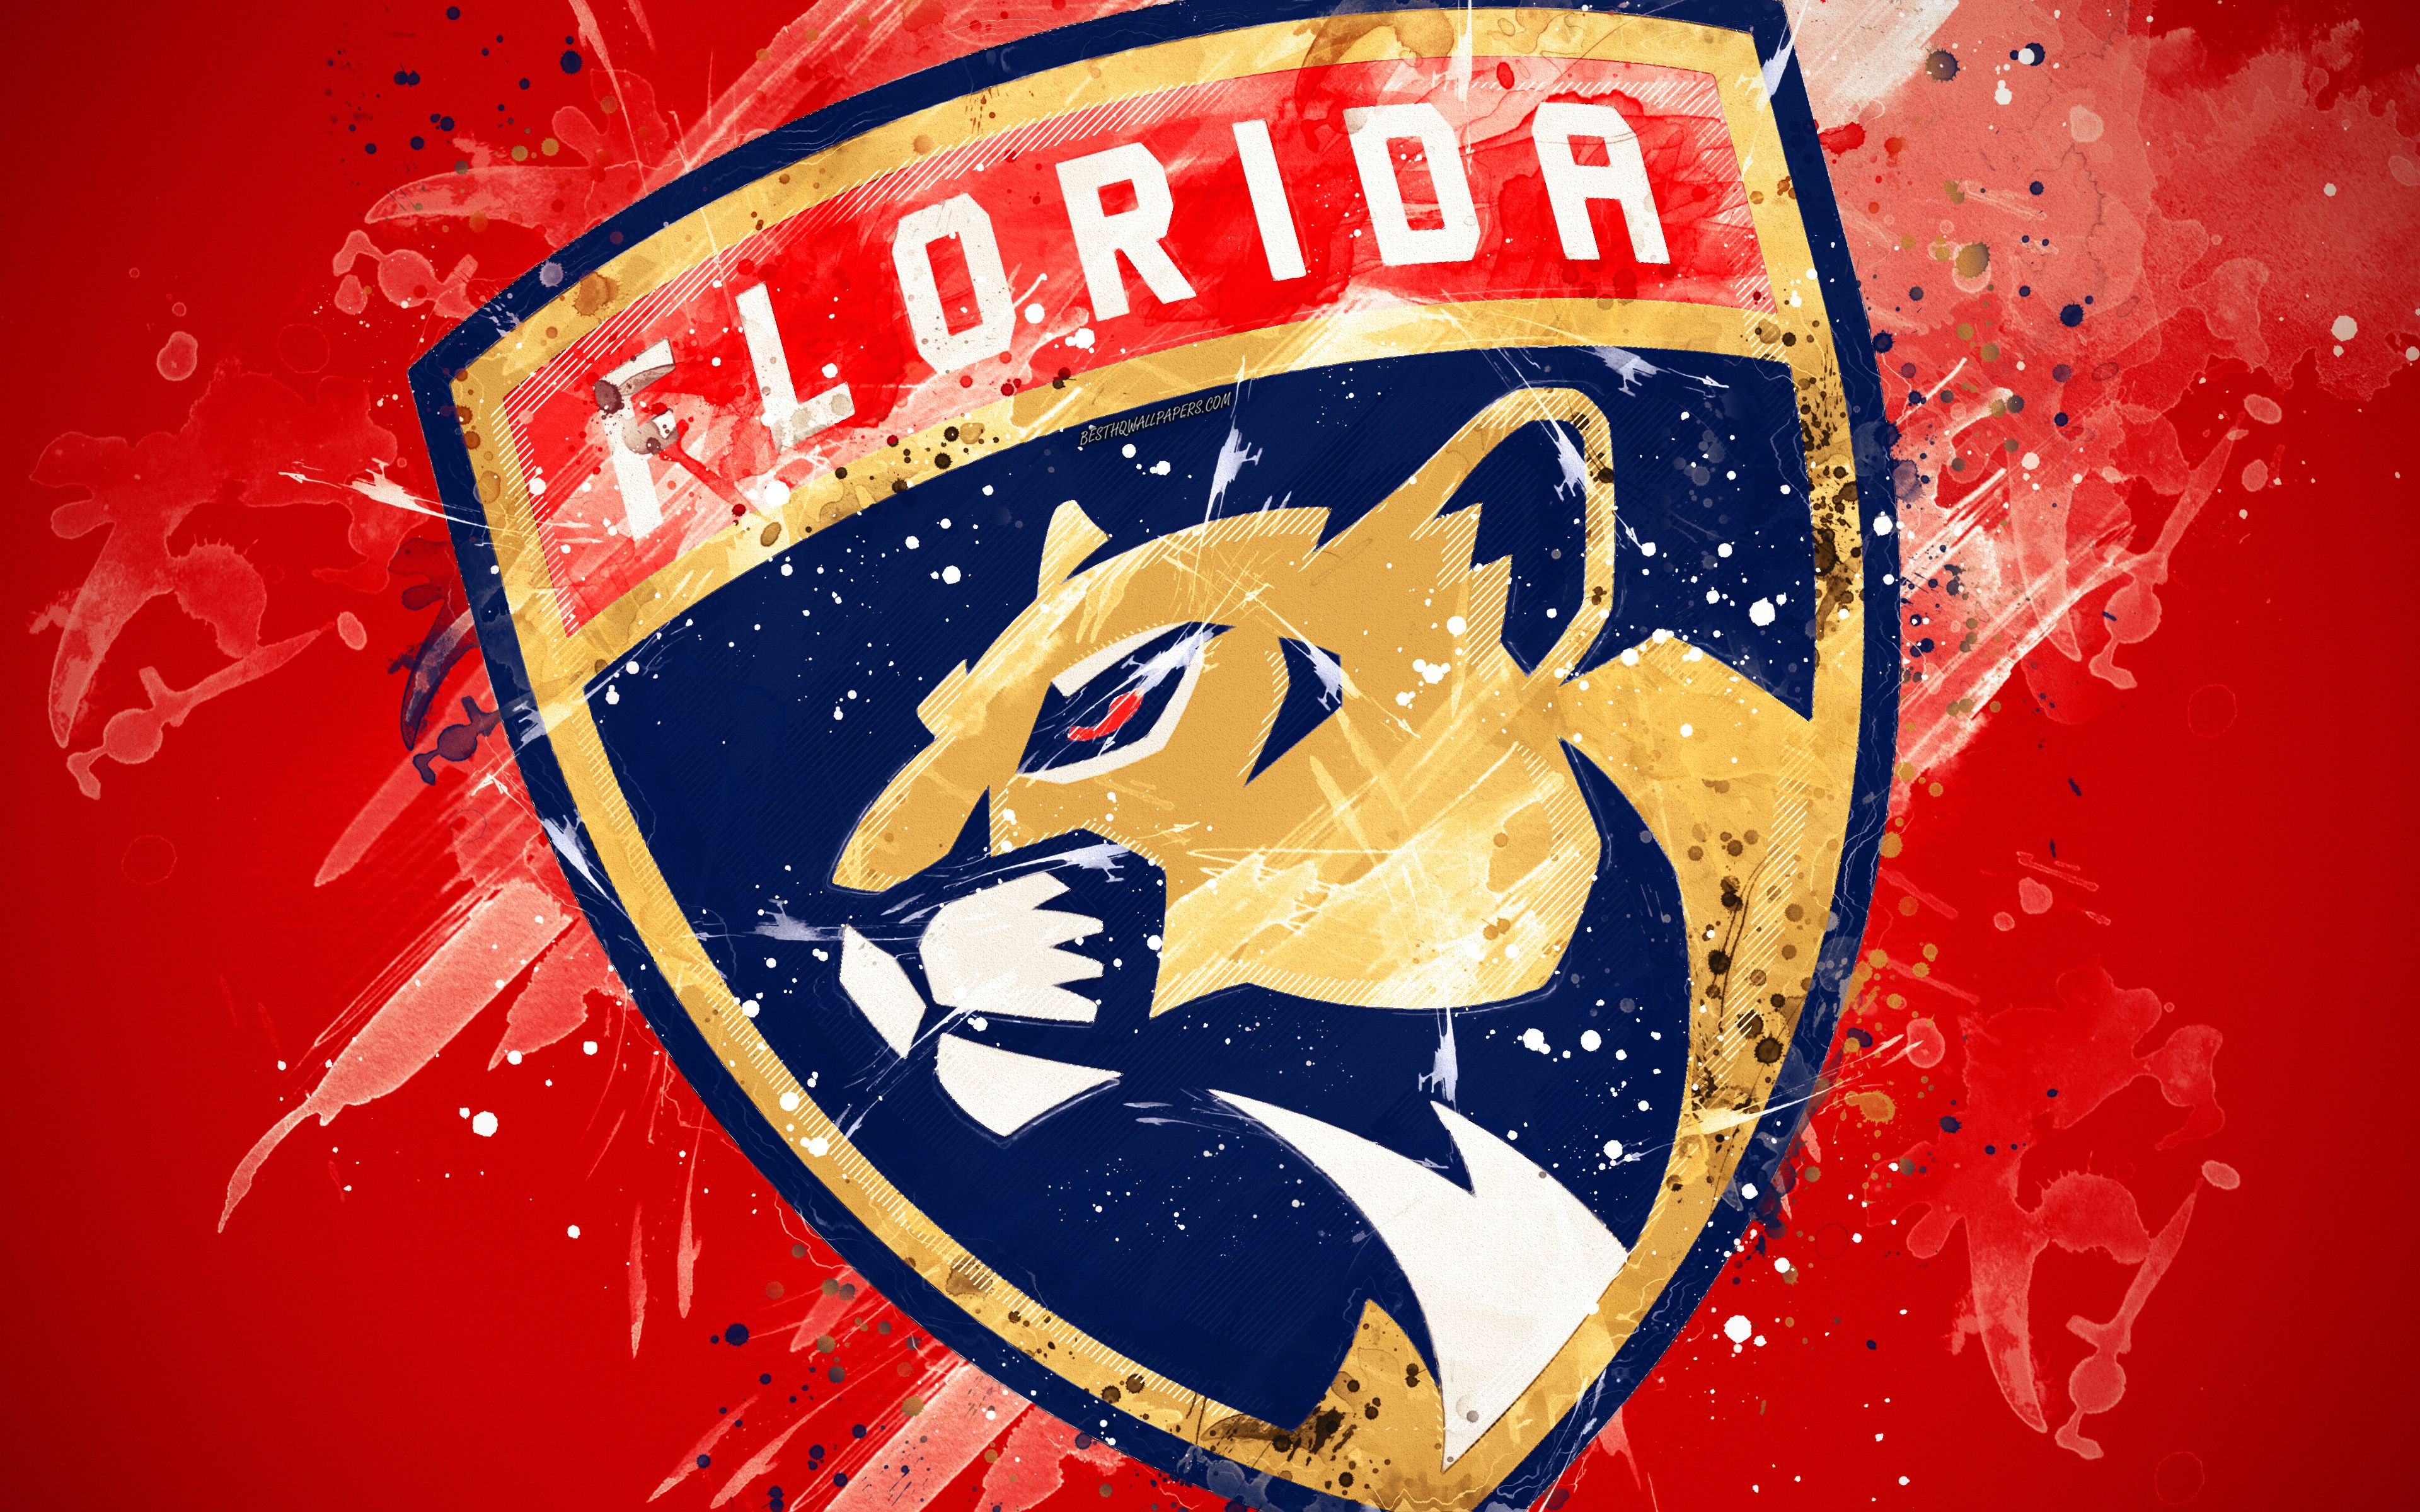 Download wallpaper Florida Panthers .besthqwallpaper.com